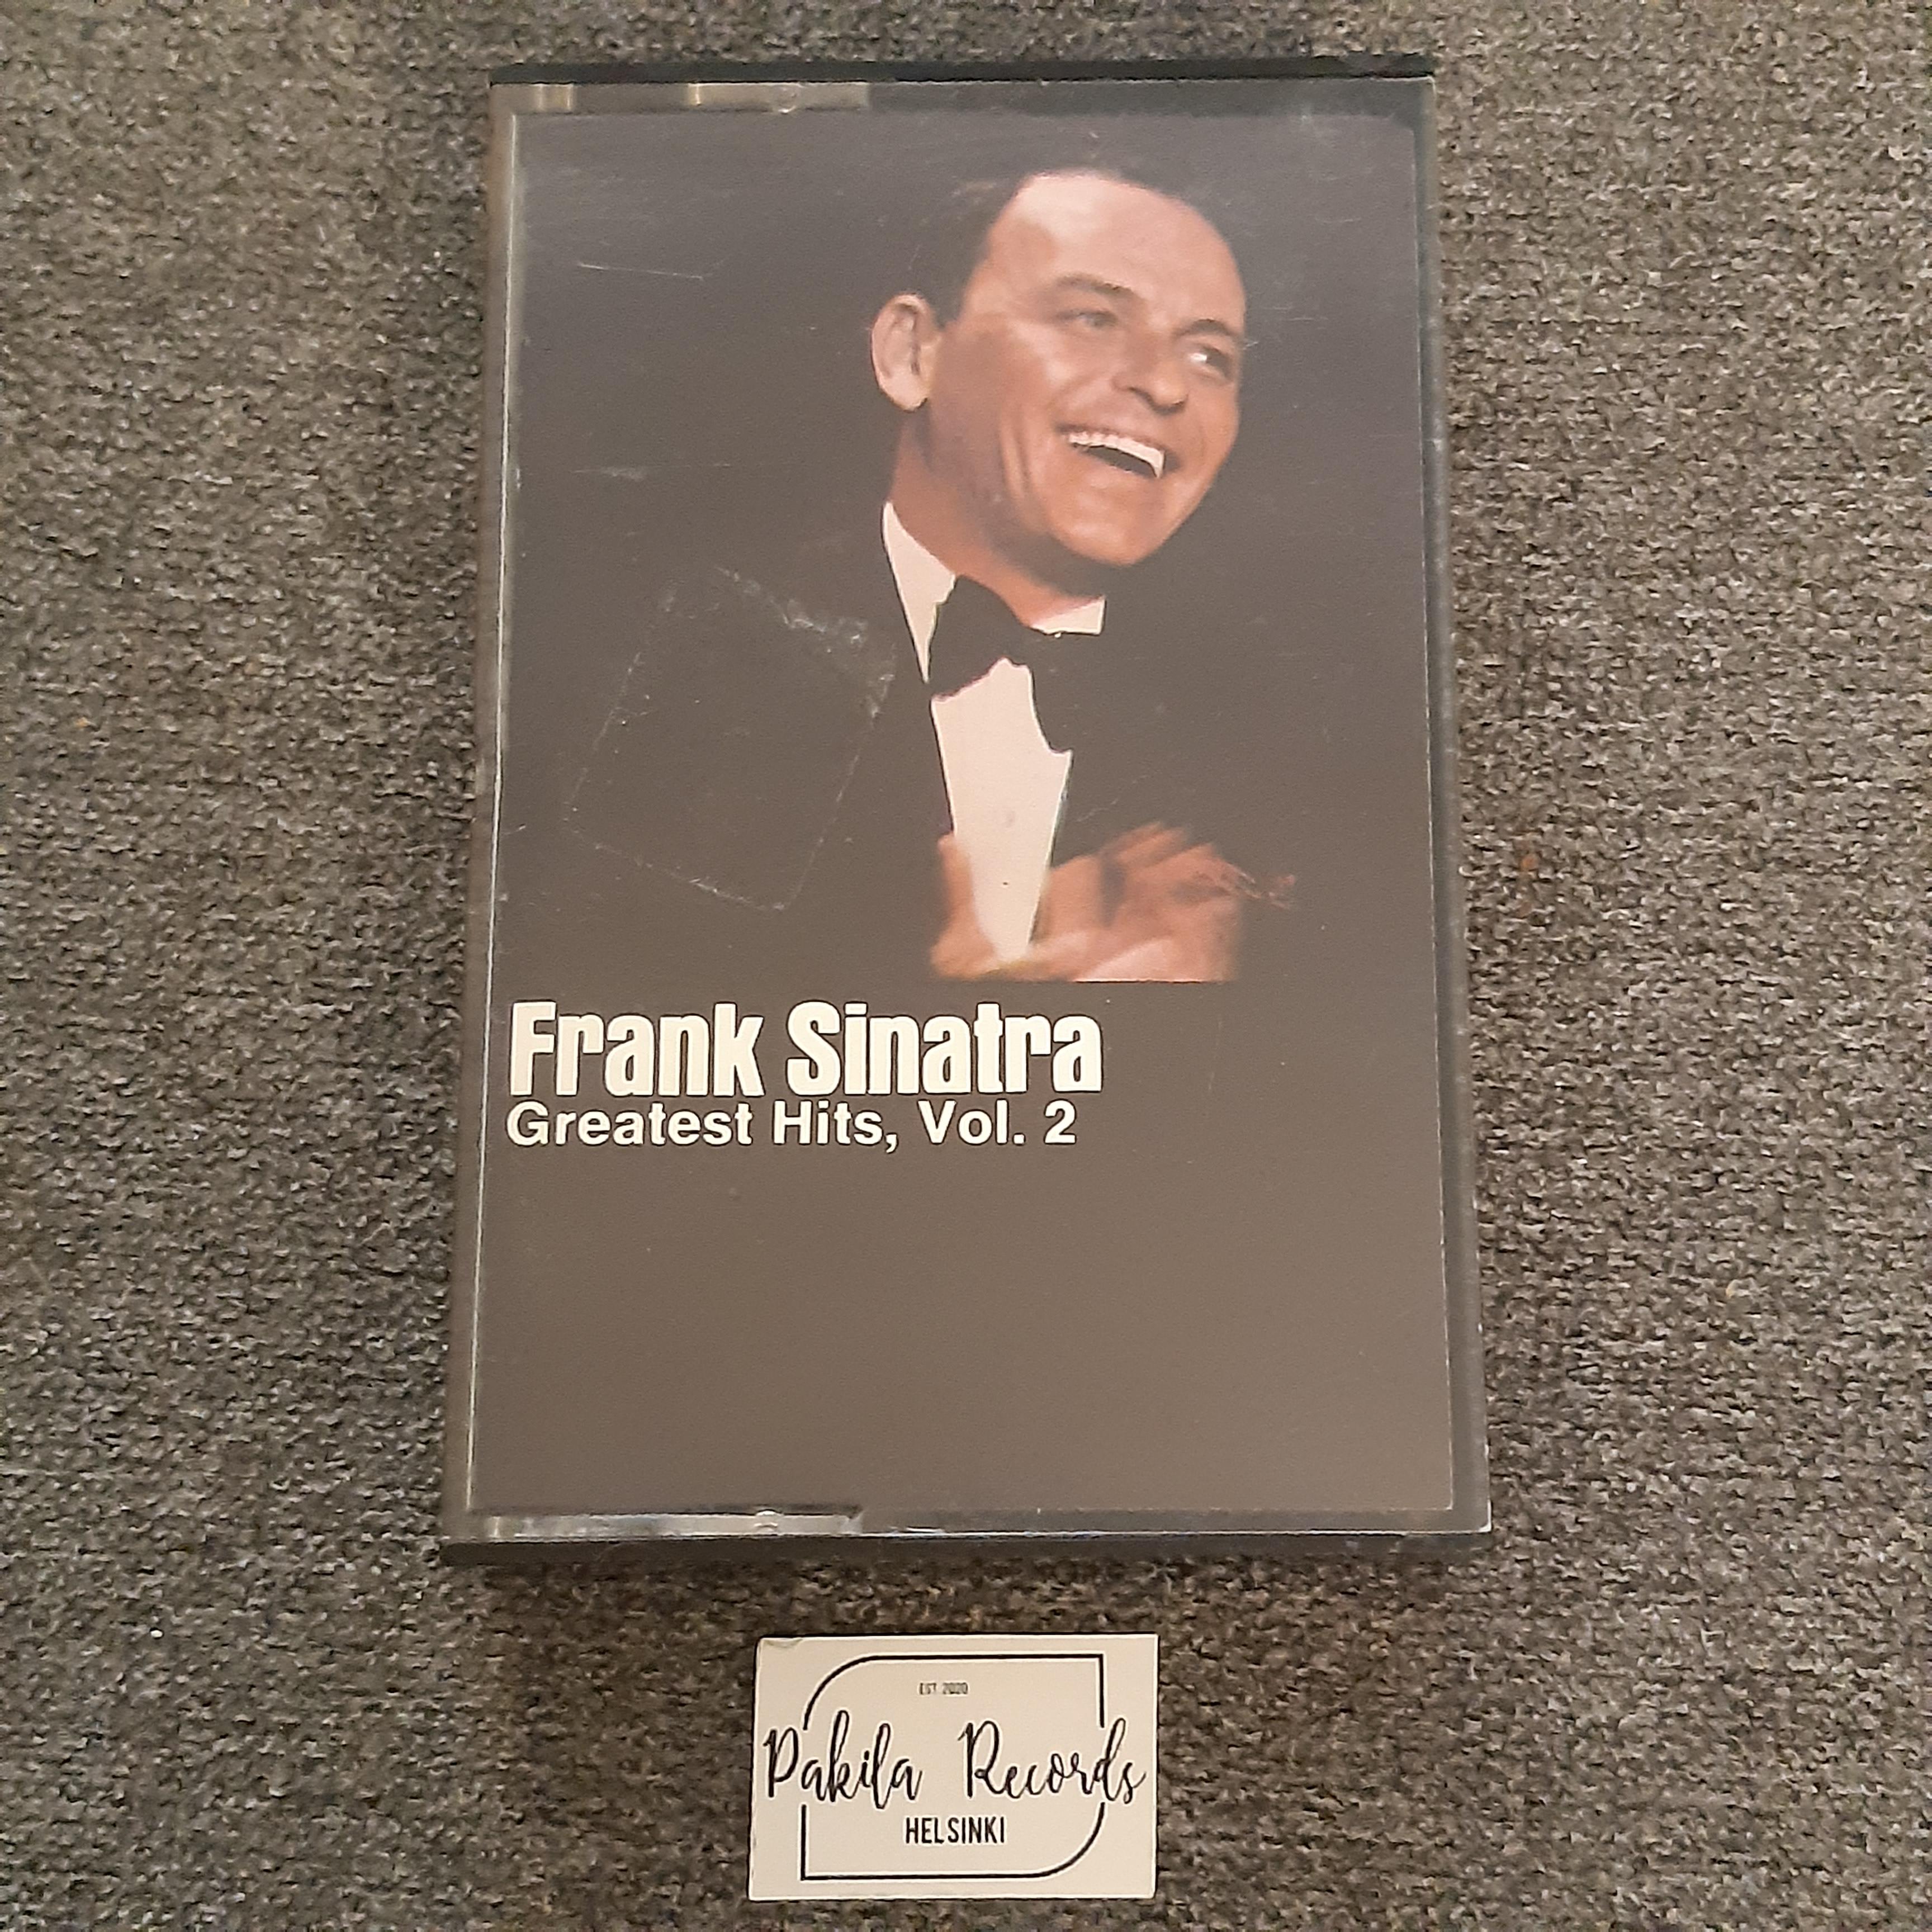 Frank Sinatra - Greatest Hits, Vol. 2 - Kasetti (käytetty)